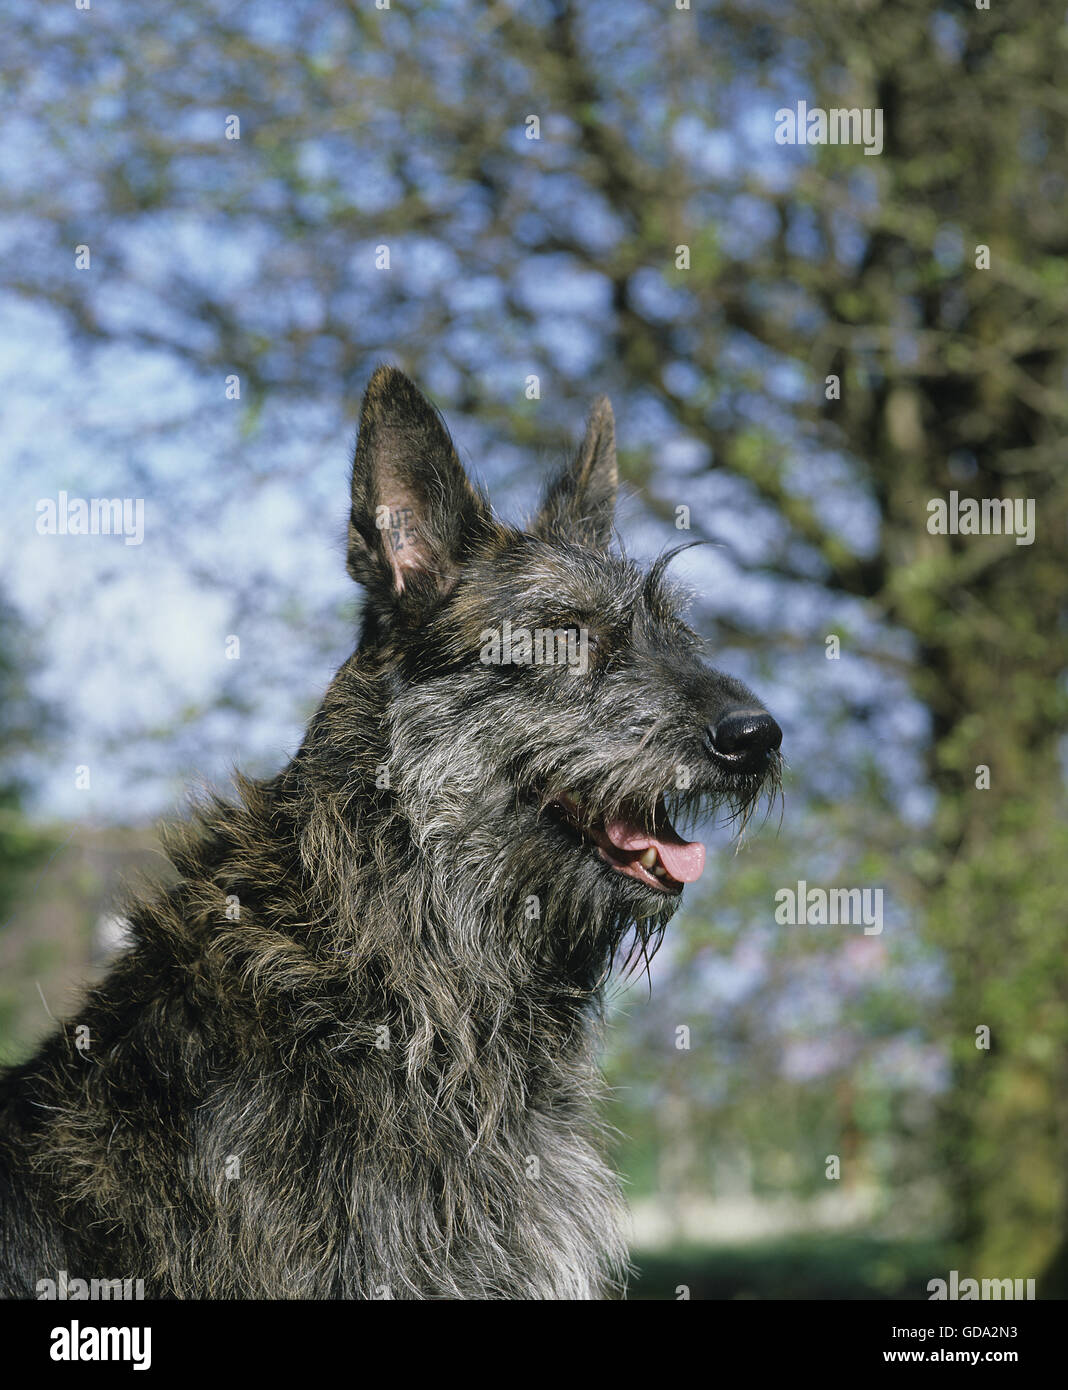 Picardy Shepherd Dog, Portrait of Adult Stock Photo